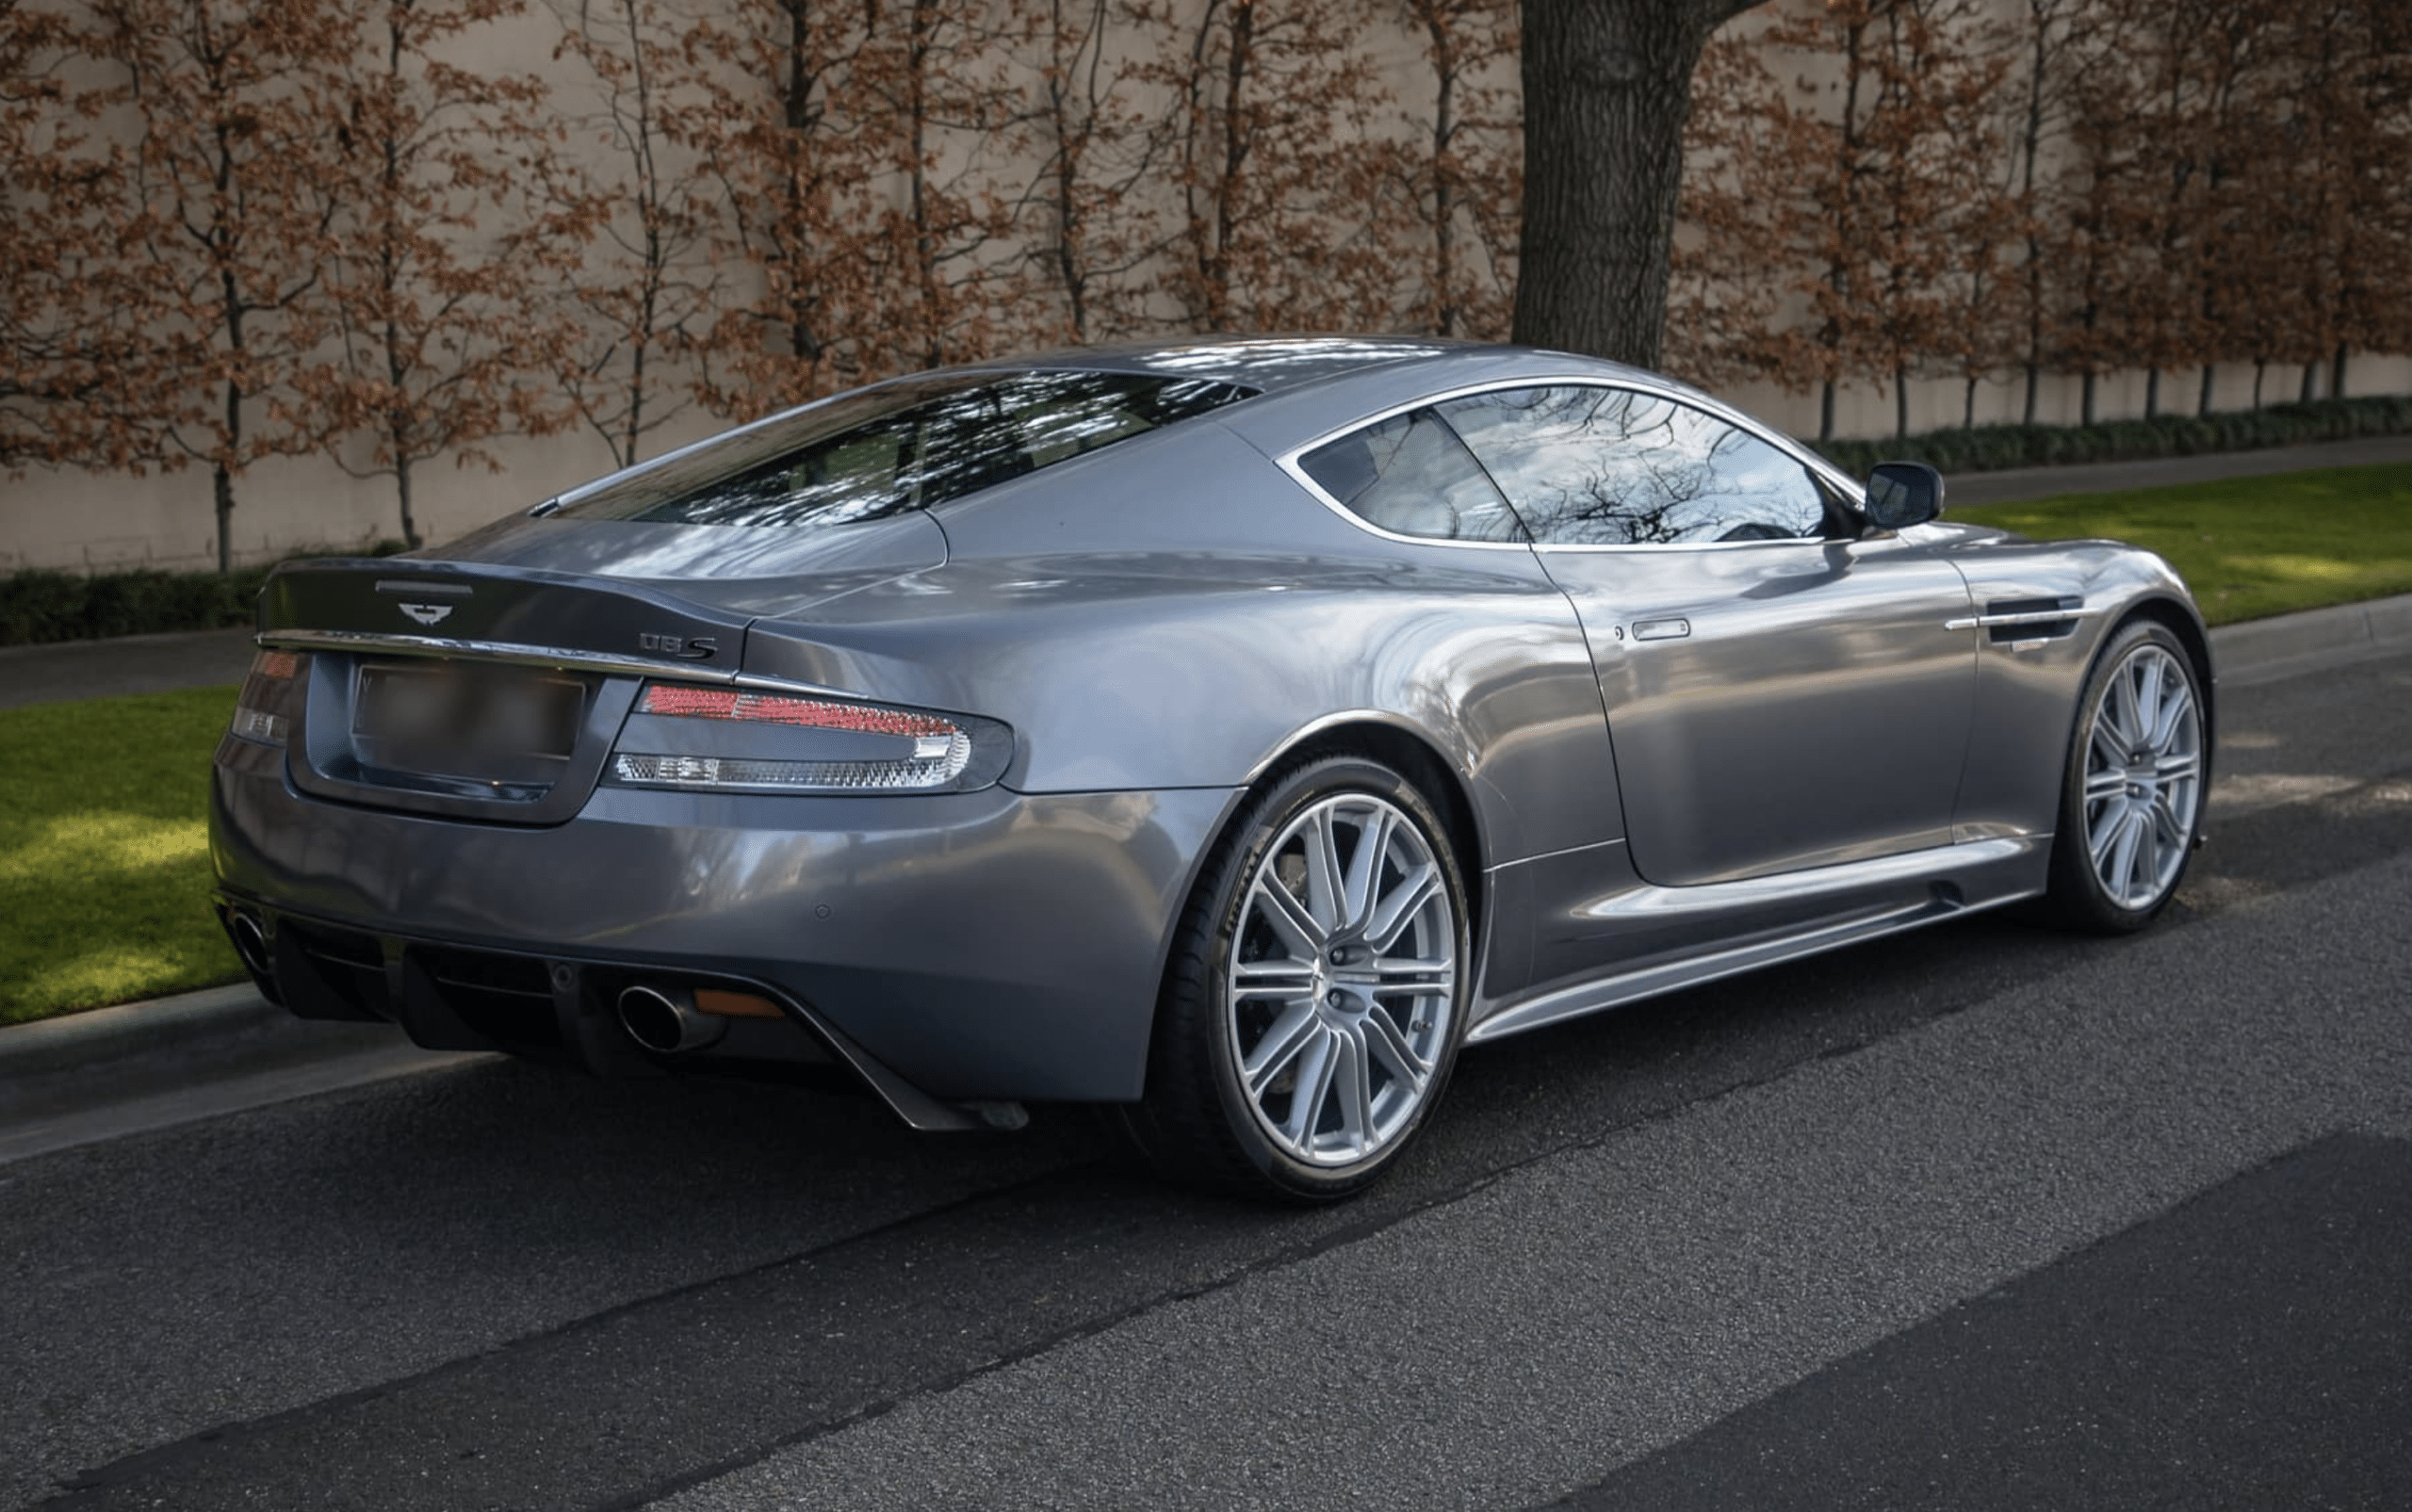 2008 Aston Martin DBS